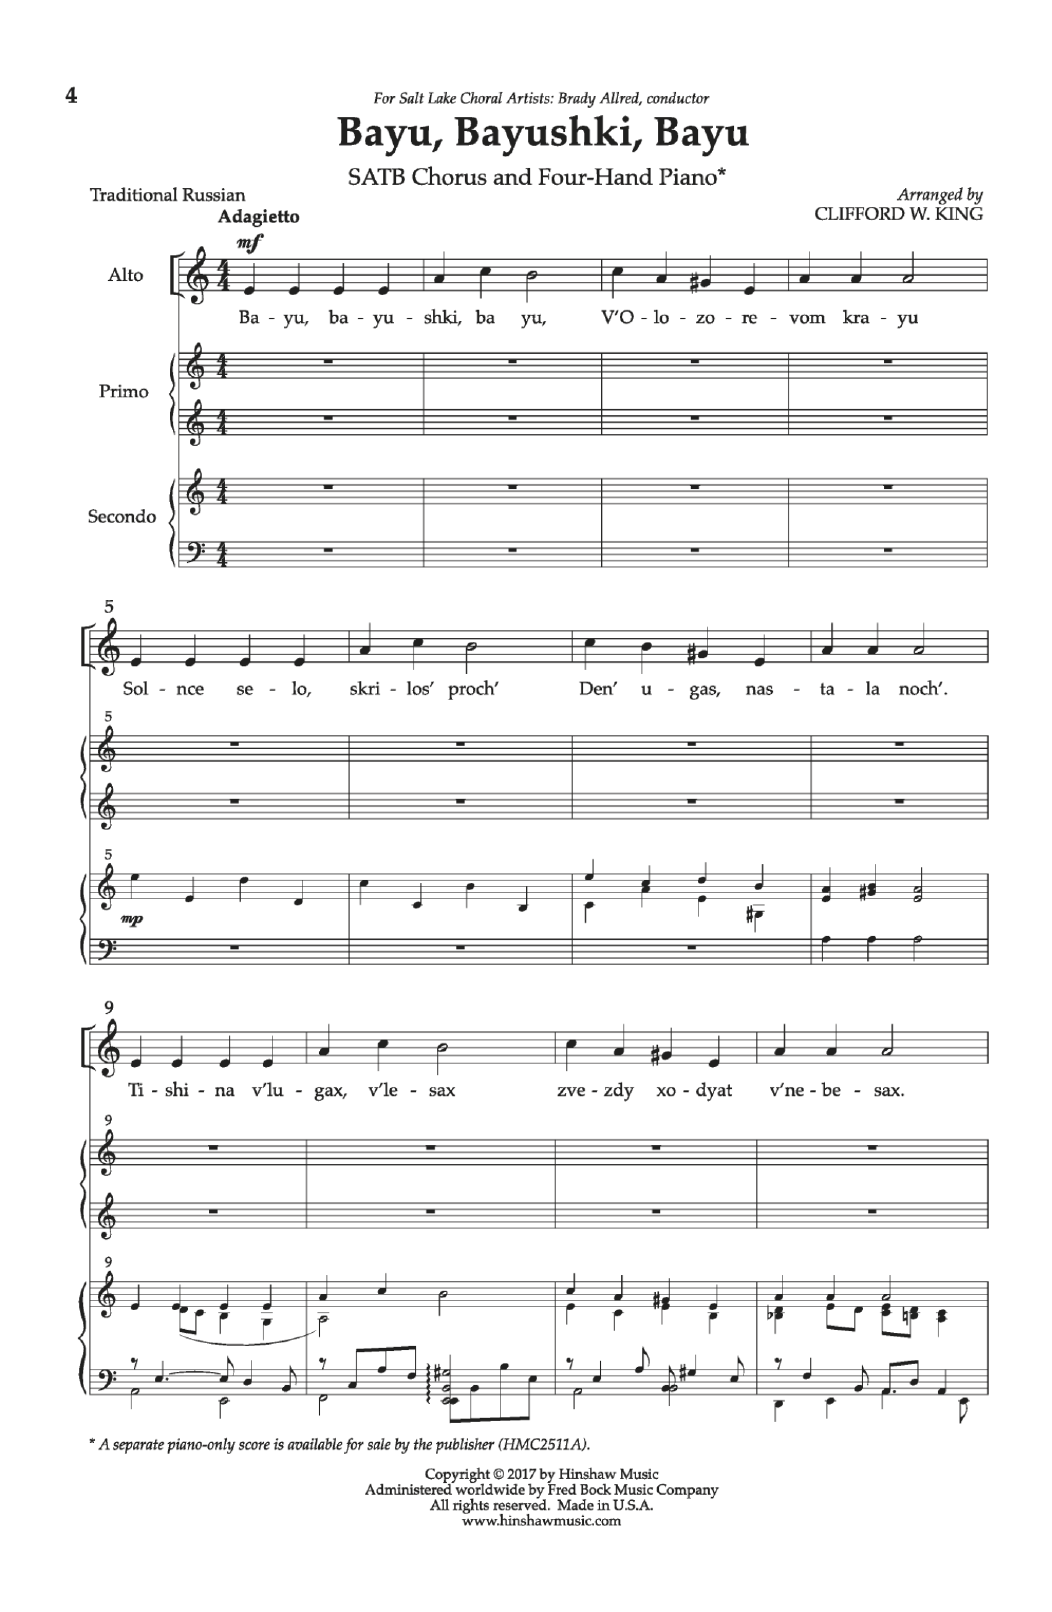 Clifford W. King Bayu, Bayushki, Bayu Sheet Music Notes & Chords for Choral - Download or Print PDF